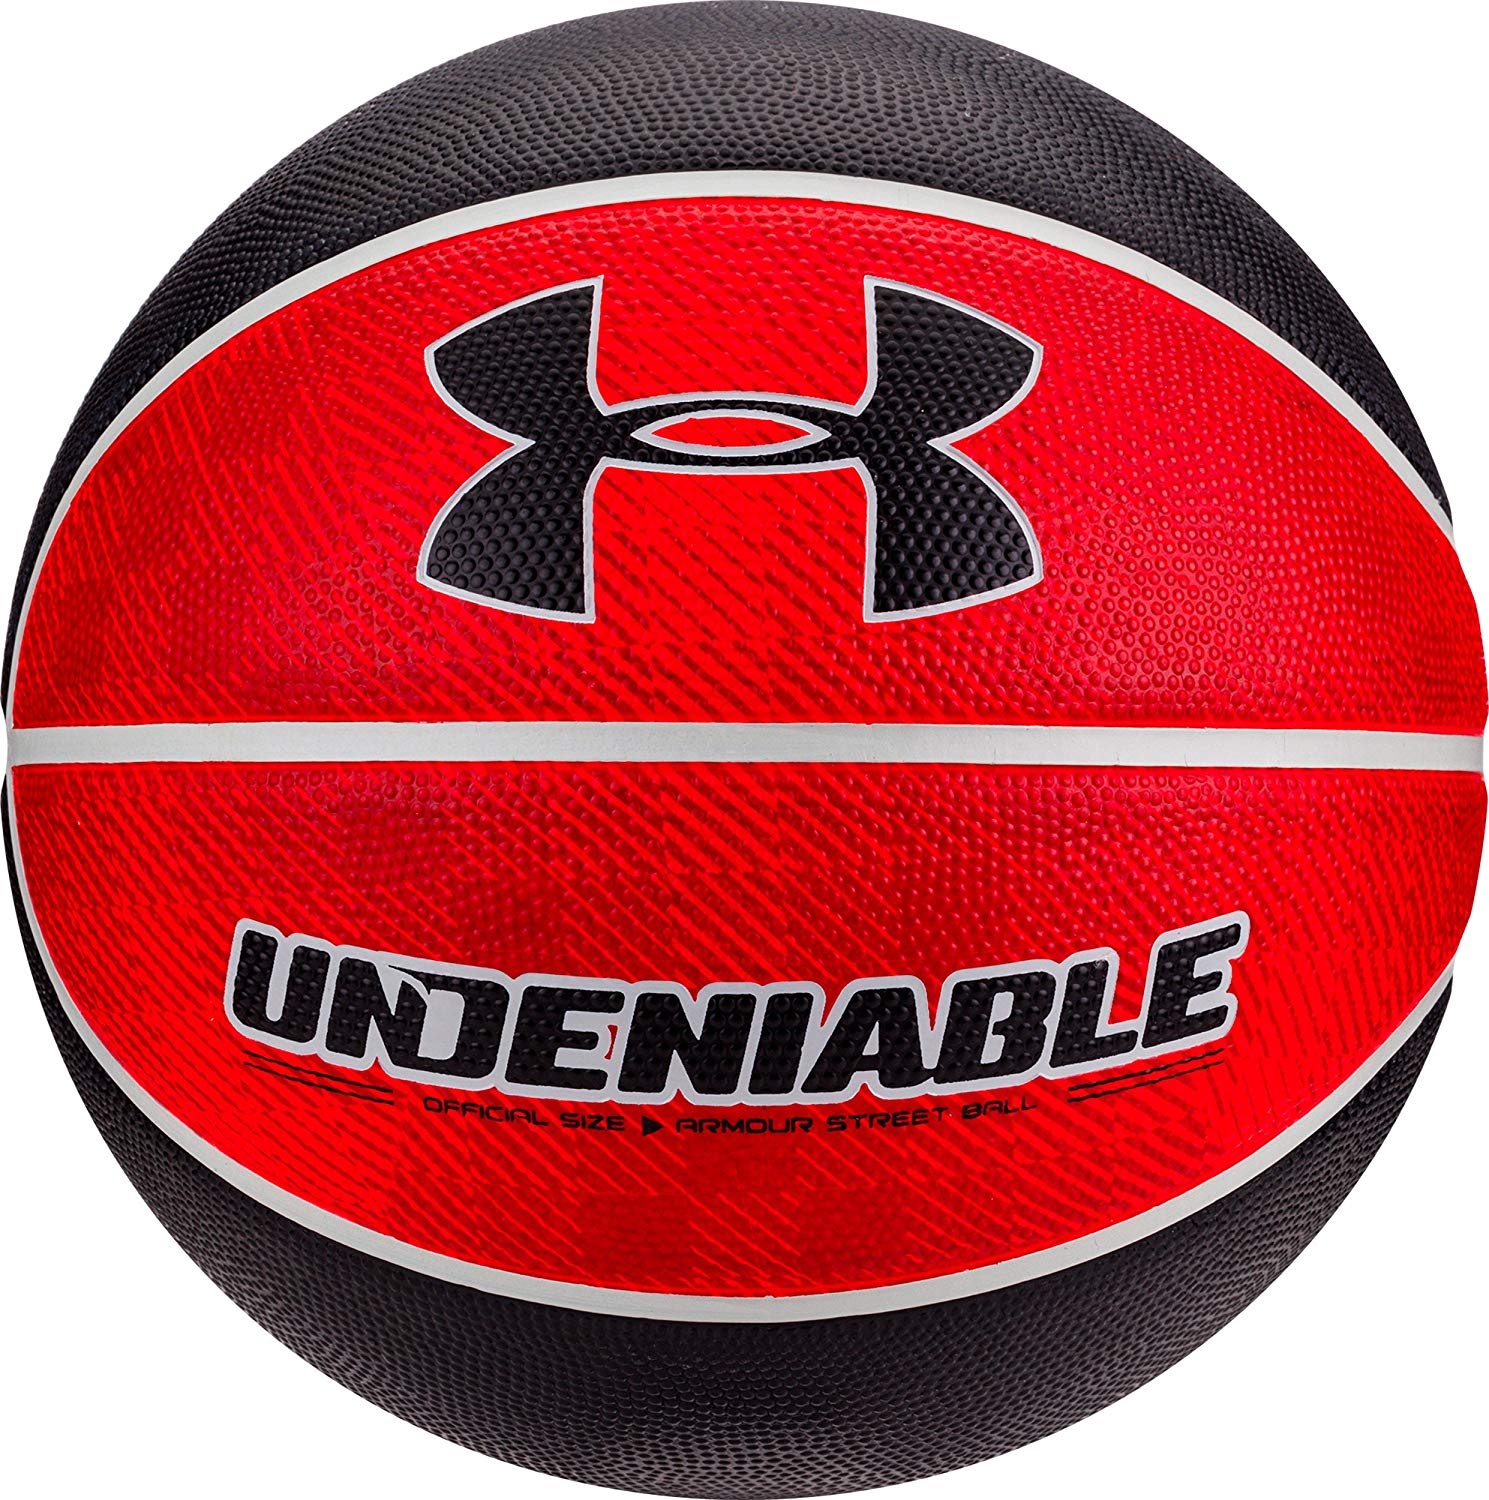 Under Armour Undeniable Basketball 